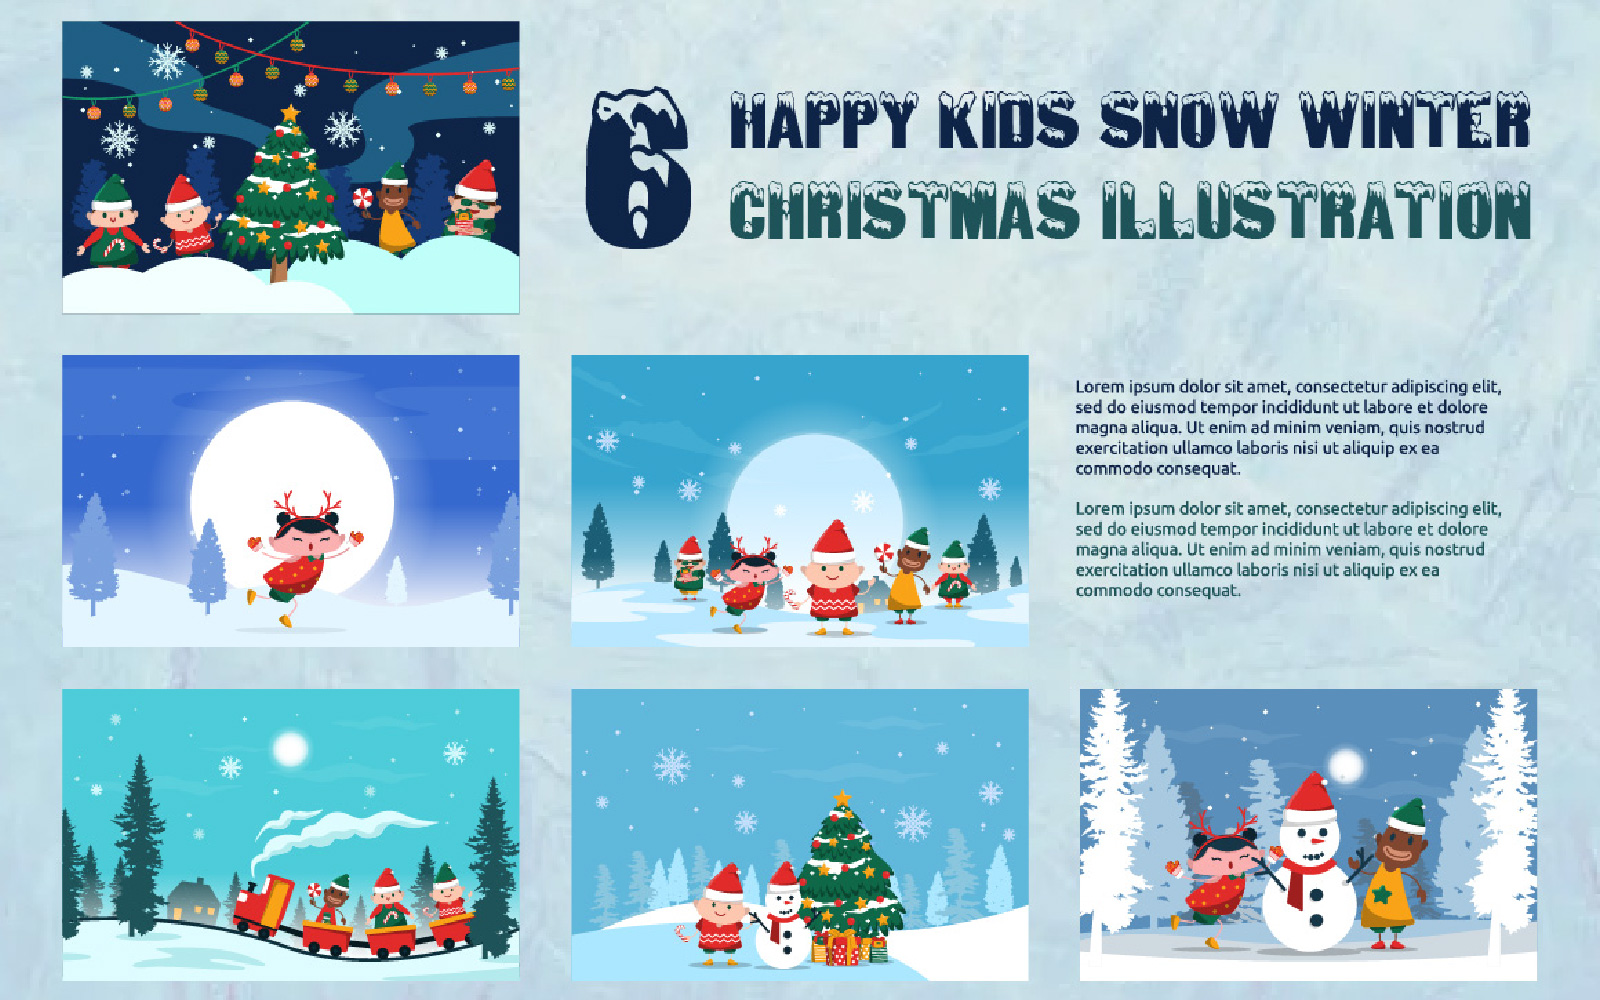 6 Happy Kids Snow Winter Christmas Illustration